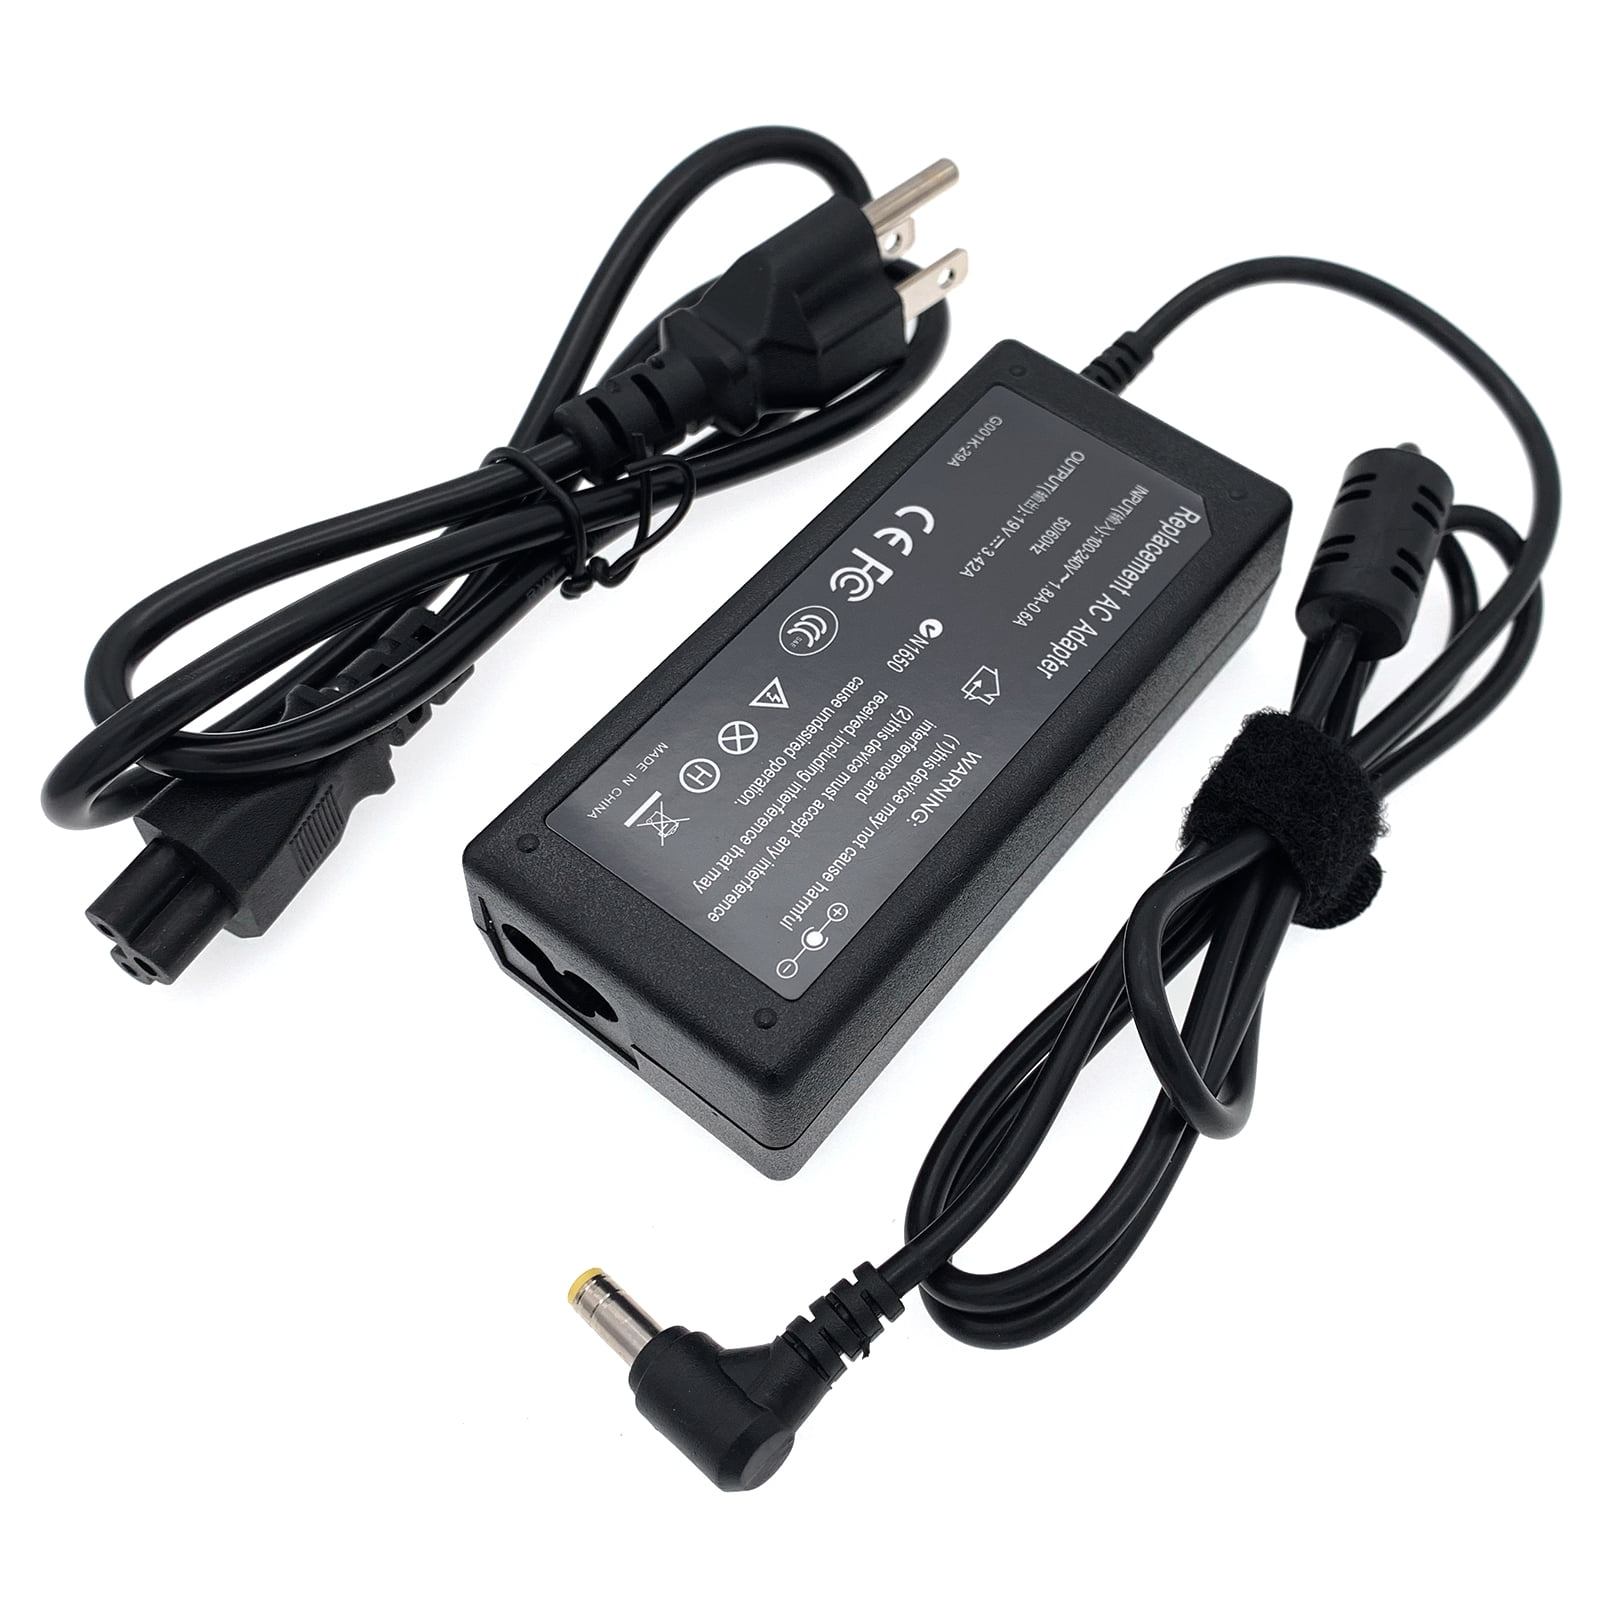 AC Adapter Charger Power Cord for JBL Xtreme Splashproof / JBL Xtreme 2 Portable Wireless Speaker - Walmart.com